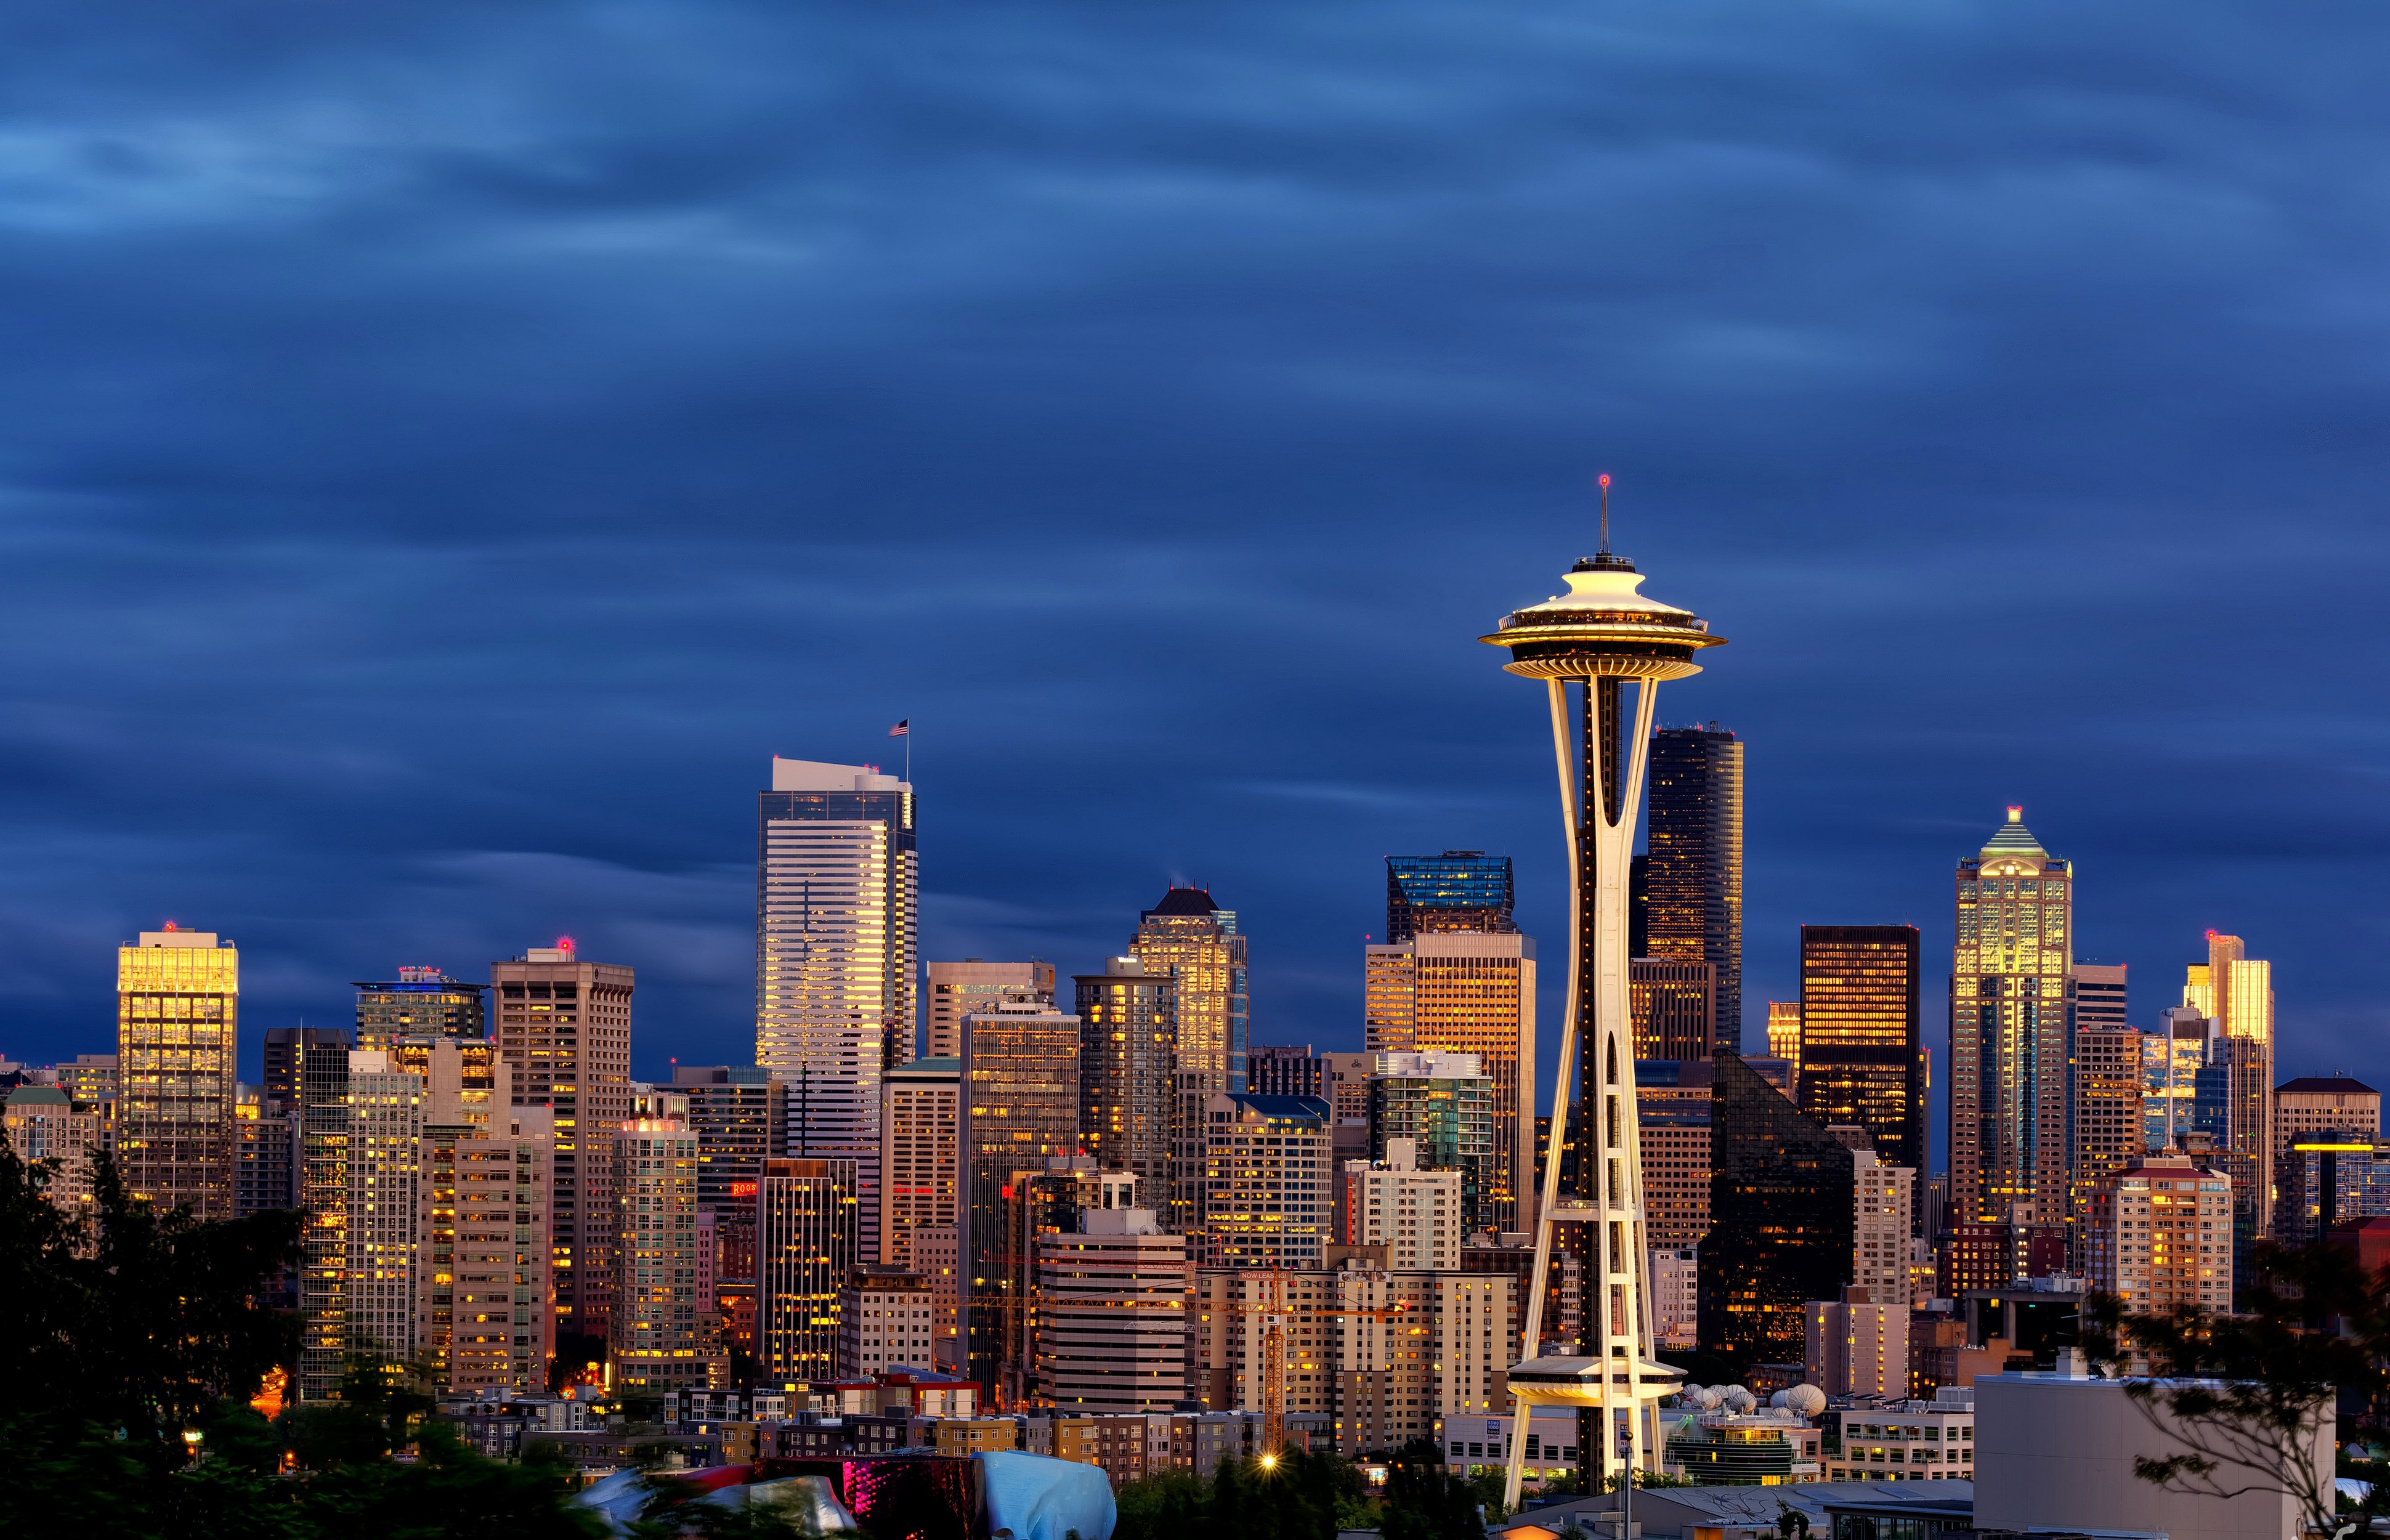 General 3880x2500 city Seattle cityscape Space Needle skyscraper Washington state USA